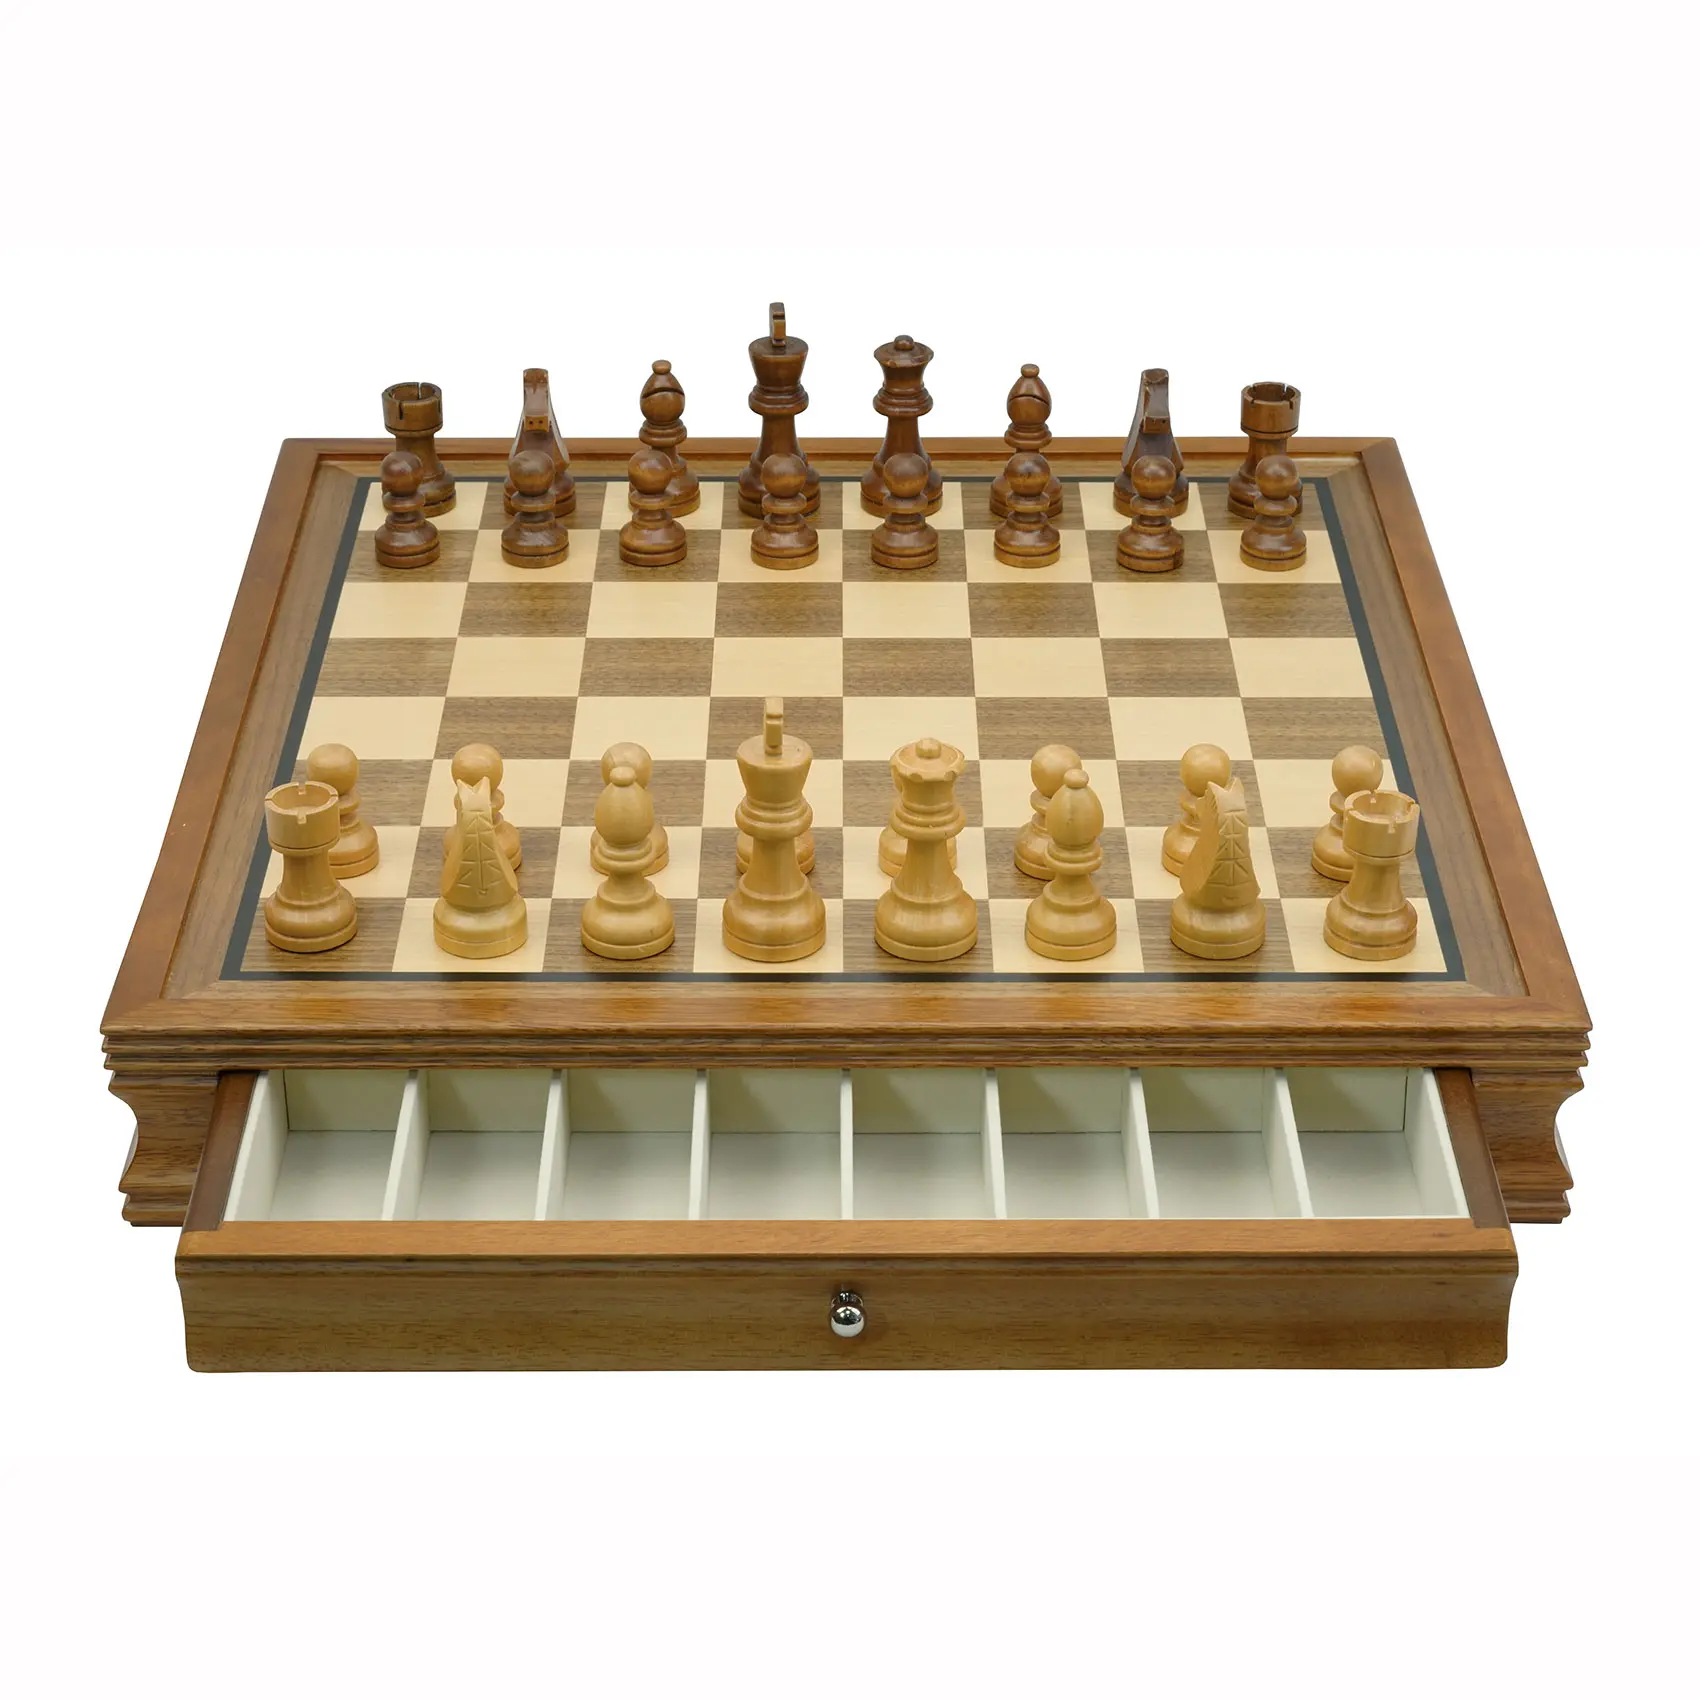 Juego de ajedrez de madera ecológico, alta calidad